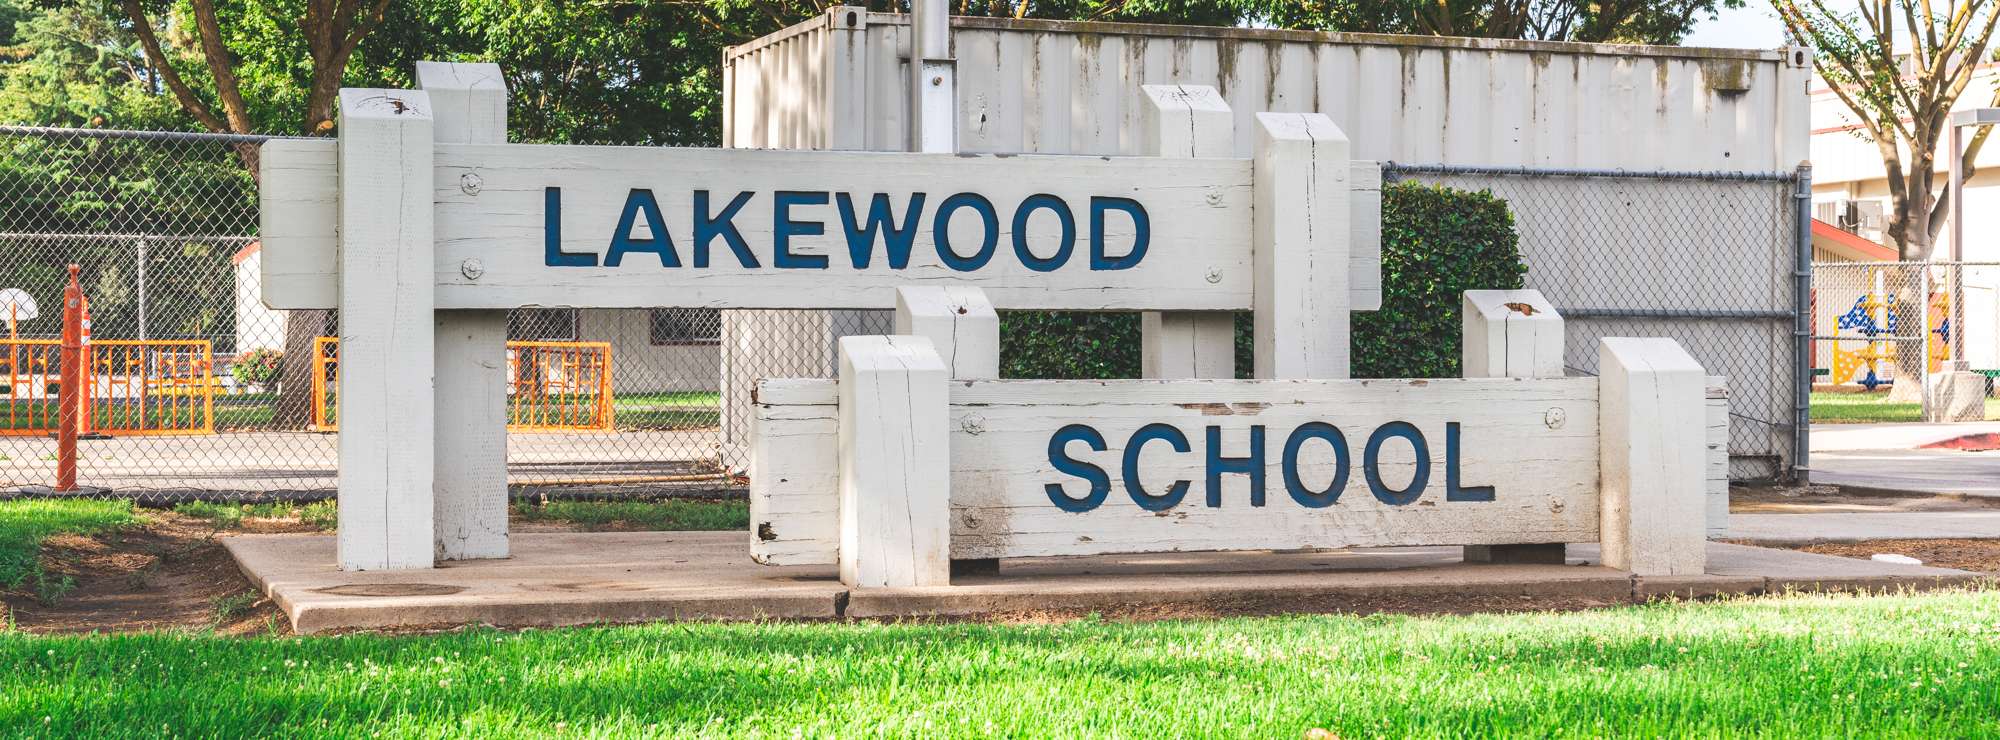 Lakewood School wooden sign in front of the school